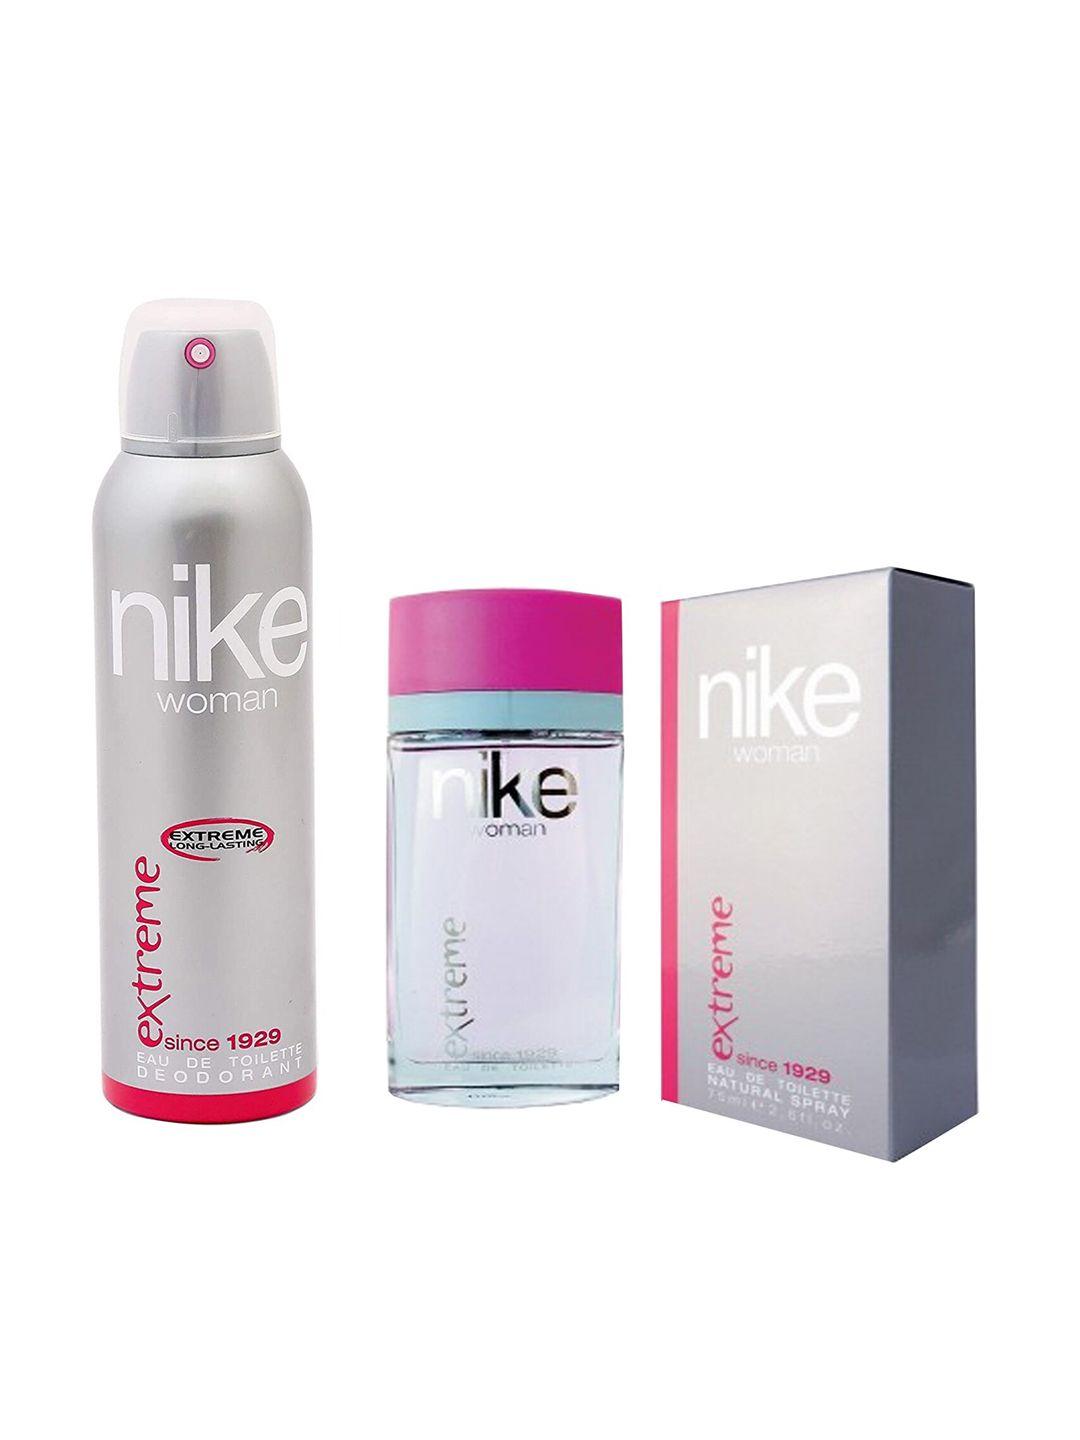 nike women set of extreme long lasting eau de toilette - 75 ml & deodorant - 200 ml